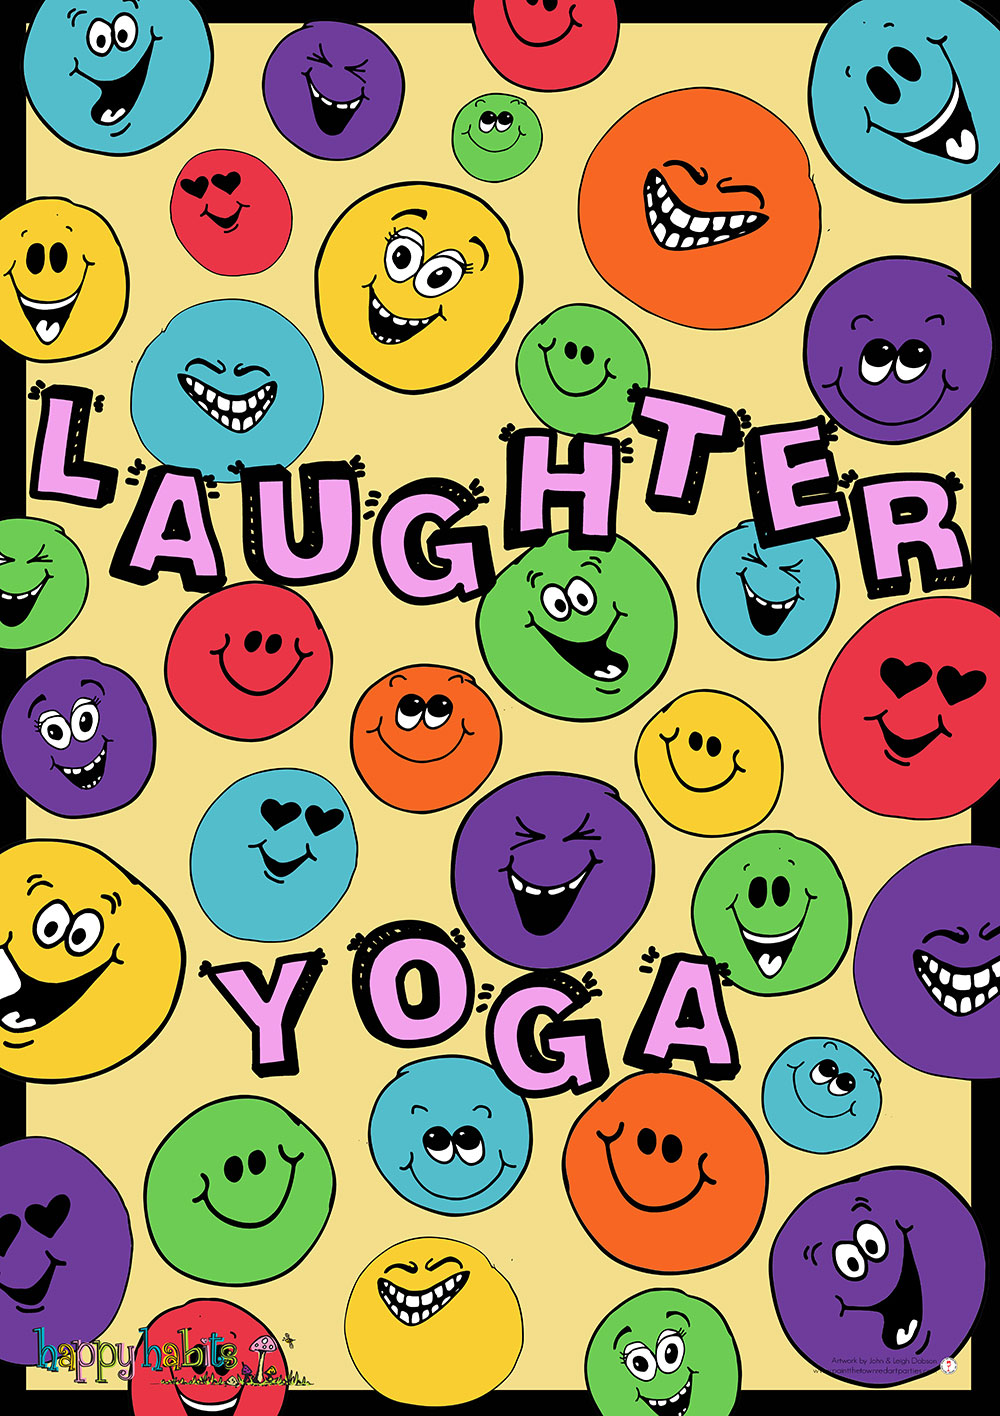 laughter-yoga.jpg